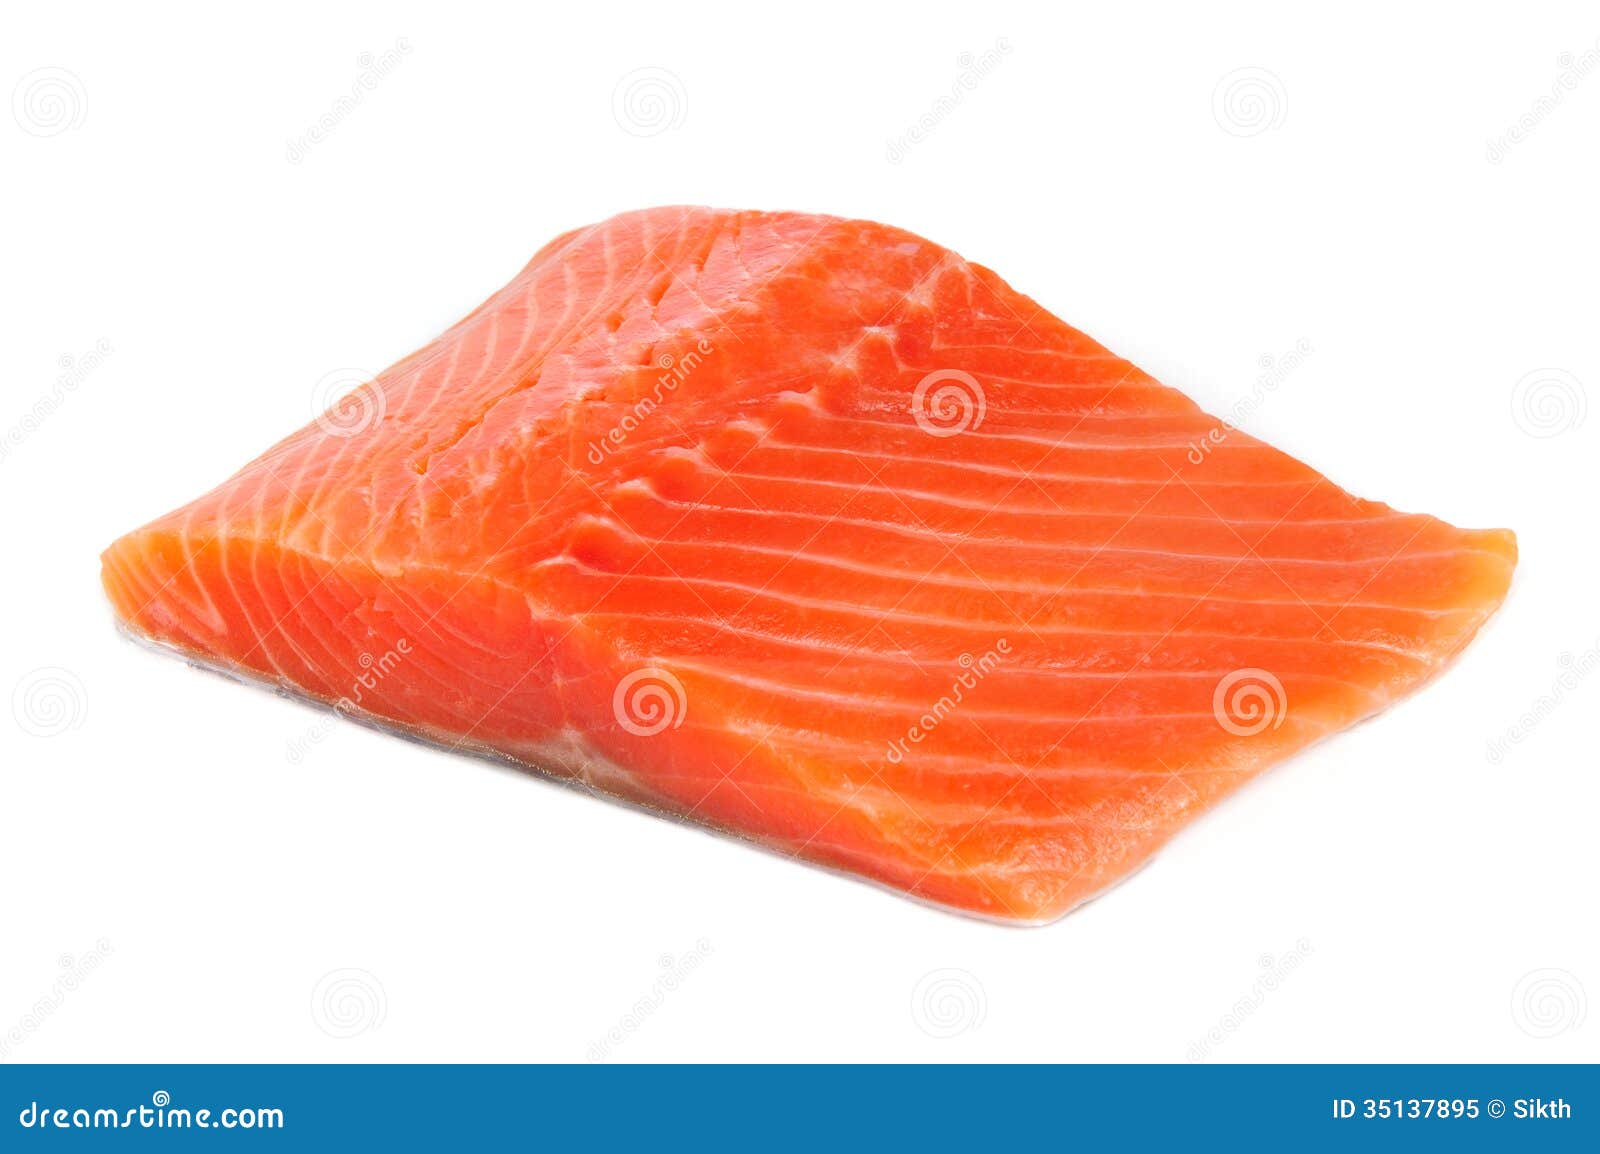 Salmon Fillet Isolated on White Background Stock Image - Image of ...